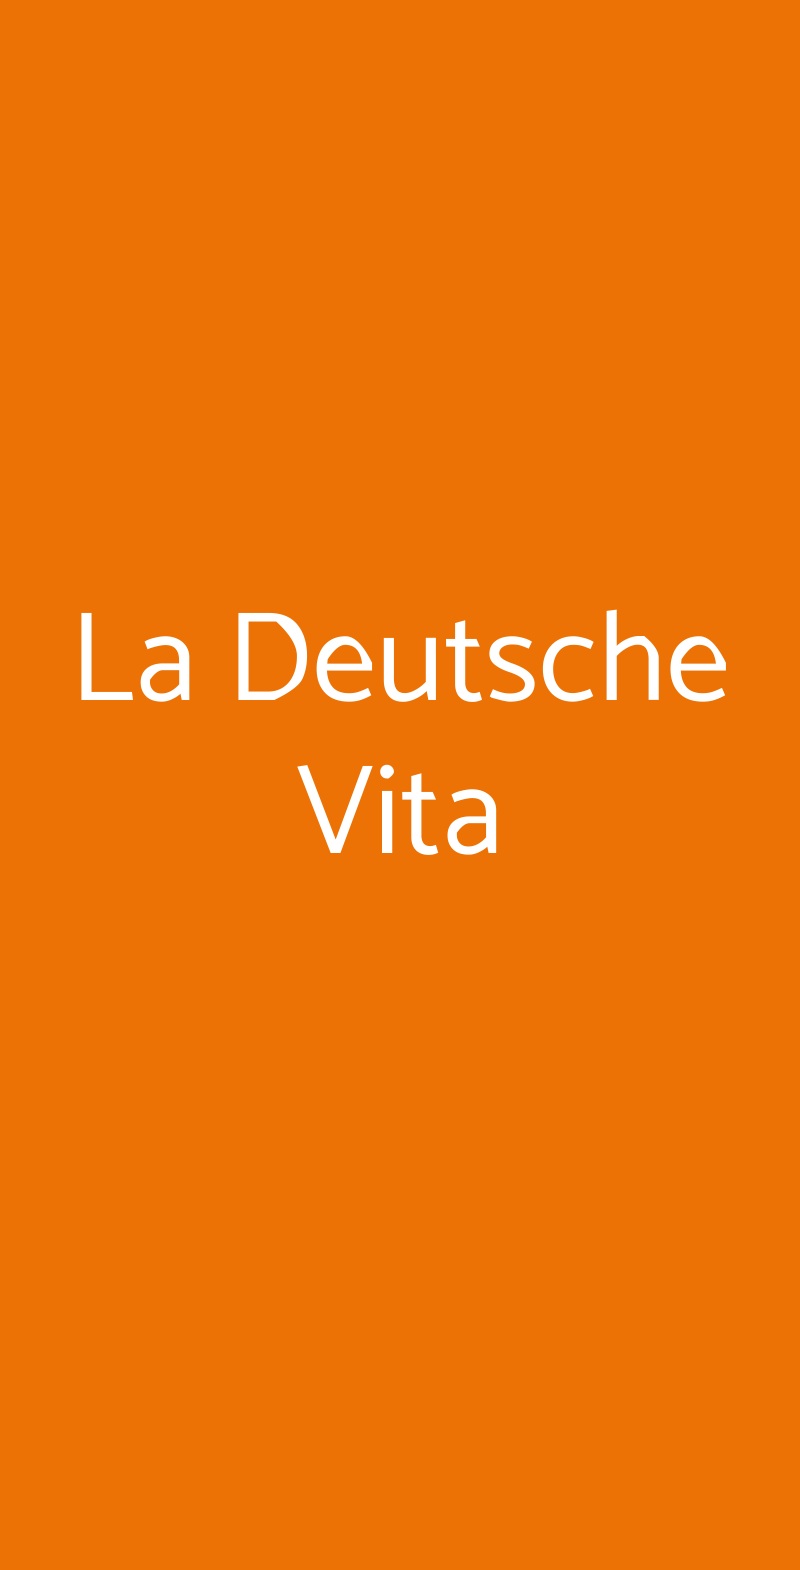 La Deutsche Vita Torino menù 1 pagina